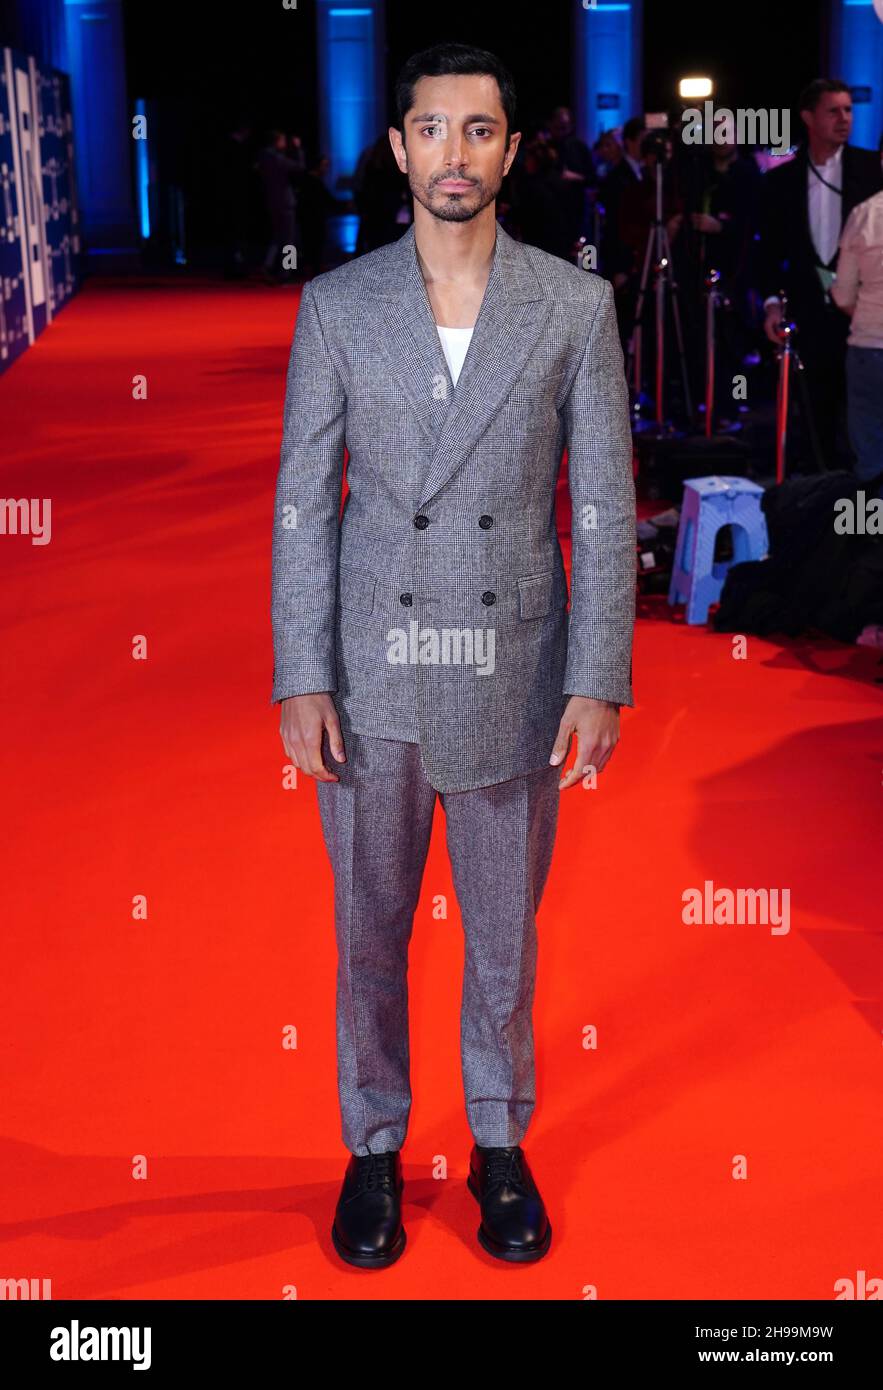 RIZ Ahmed bei der Verleihung der British Independent Film Awards 24th in Old Billingsgate, London. Bilddatum: Sonntag, 5. Dezember 2021. Stockfoto